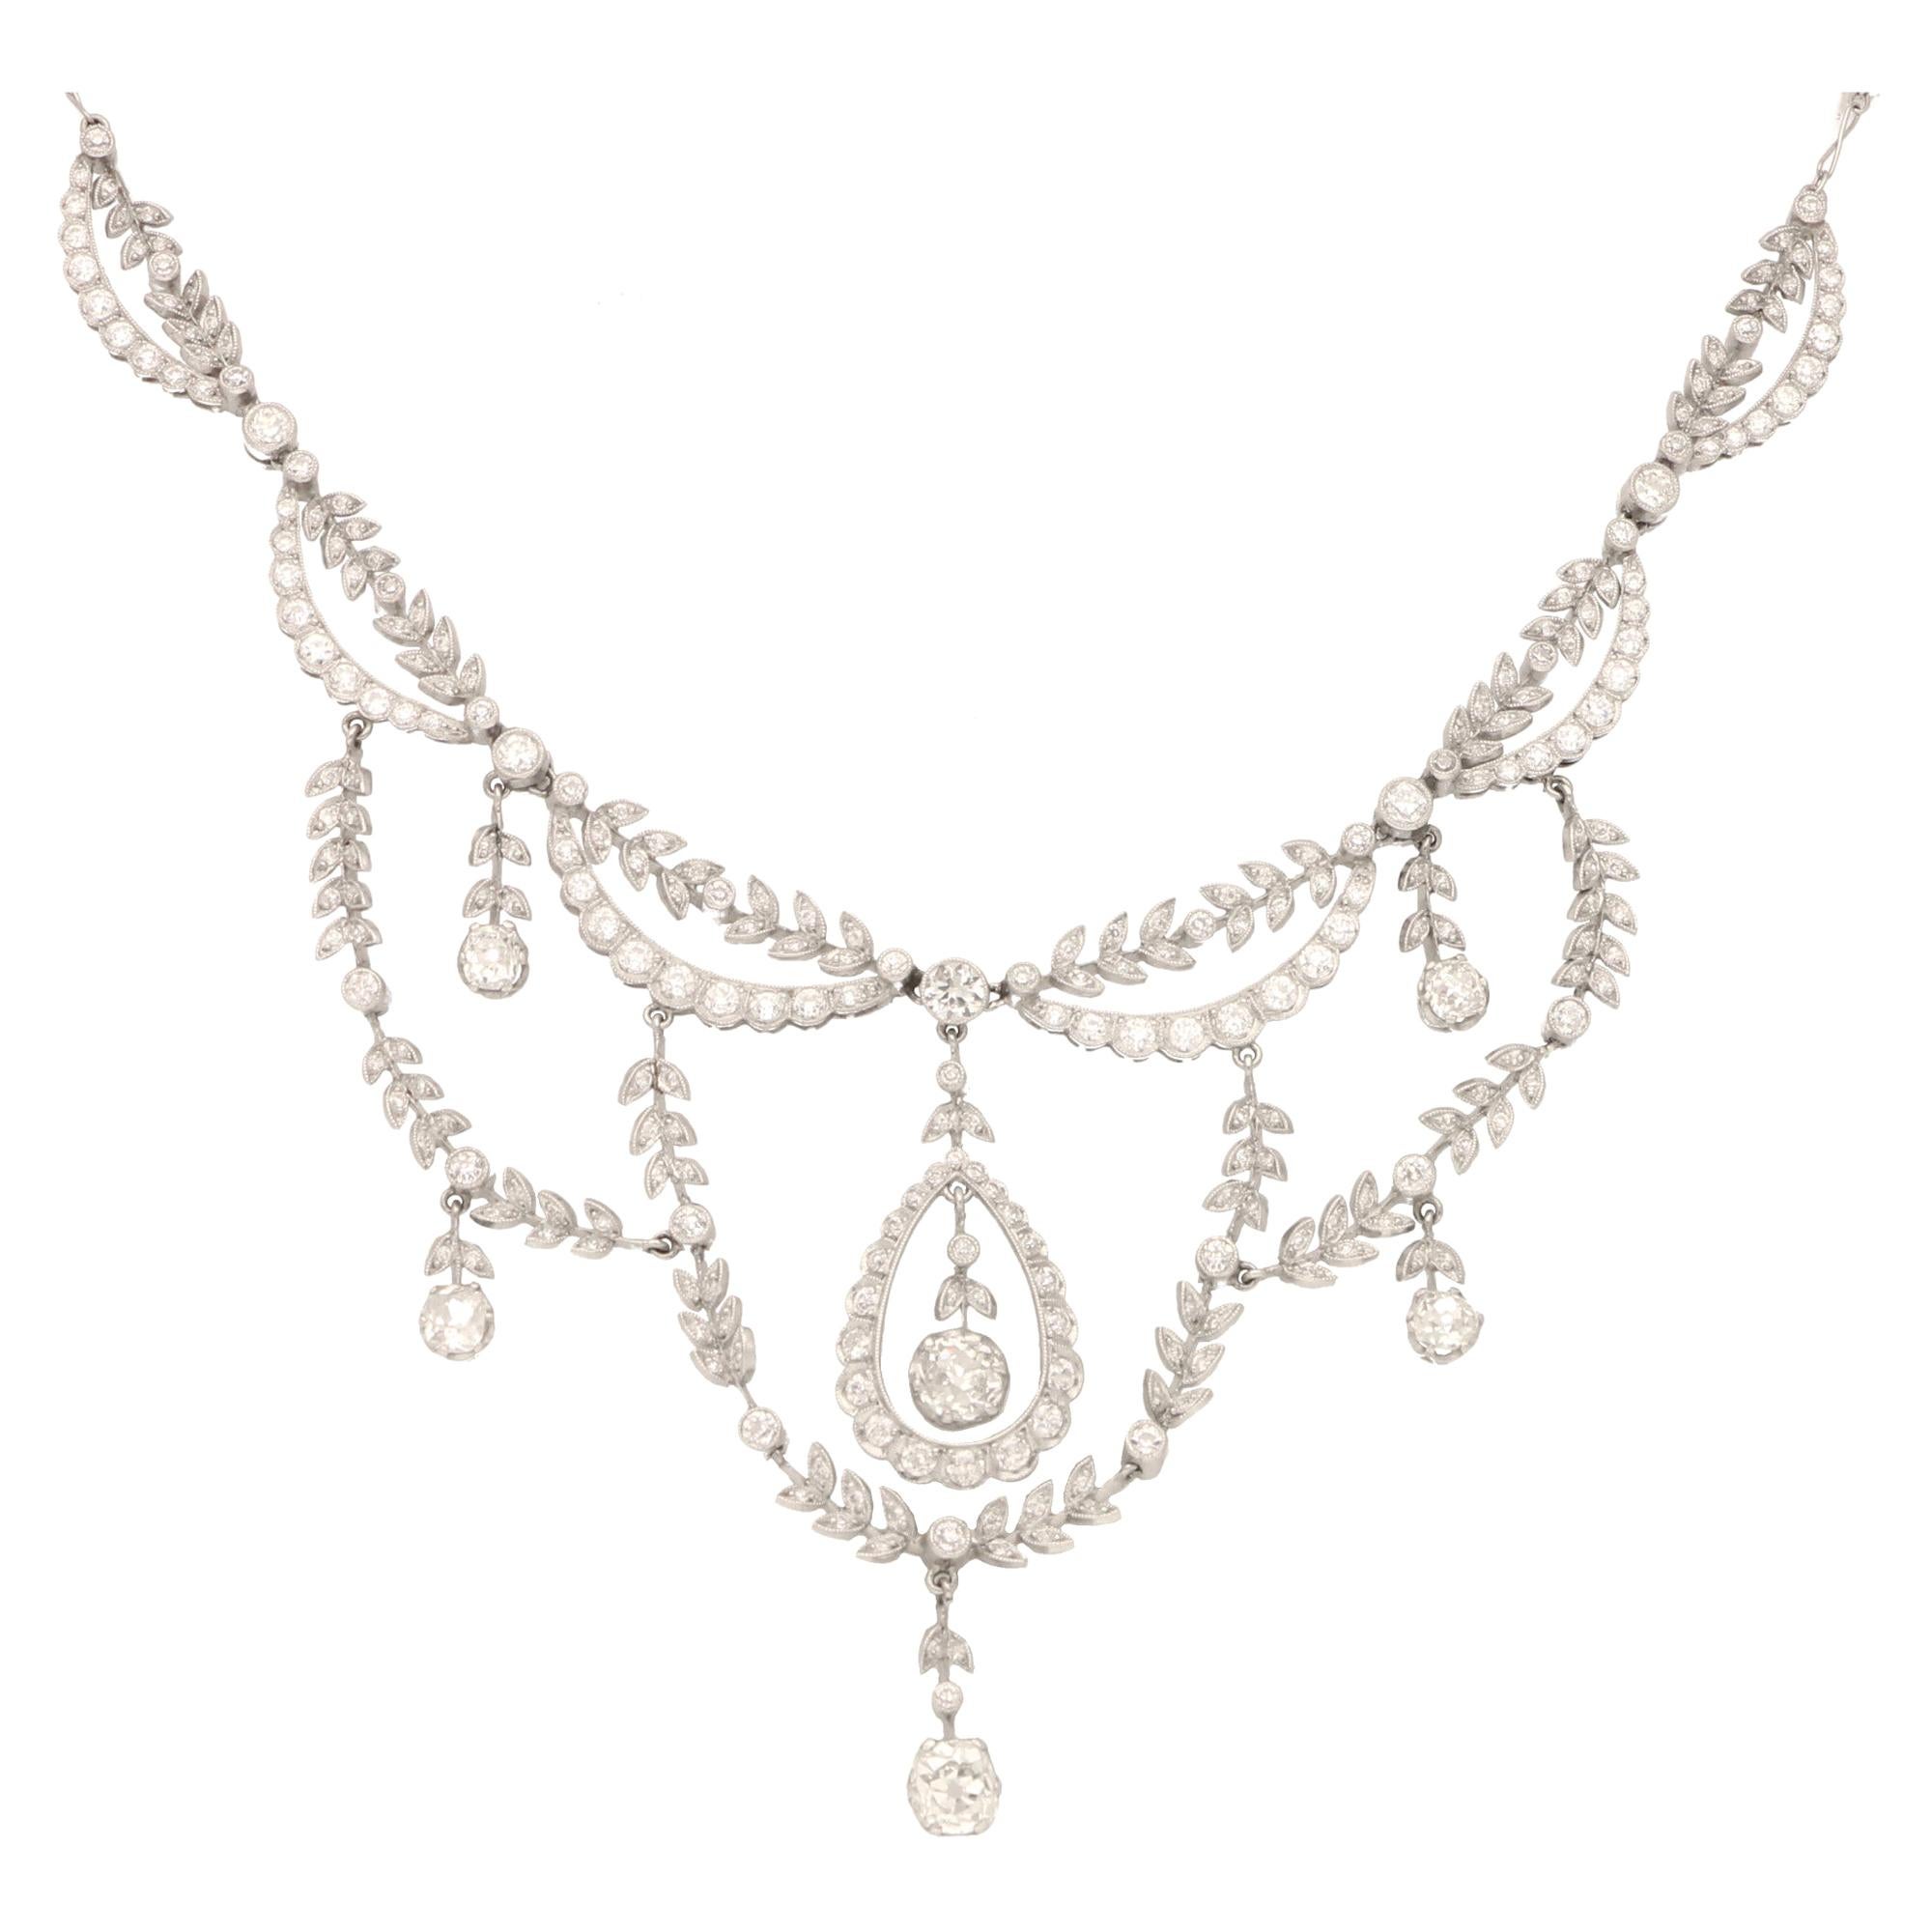 Edwardian Old Cut Diamond Filigree Necklace Set in Platinum